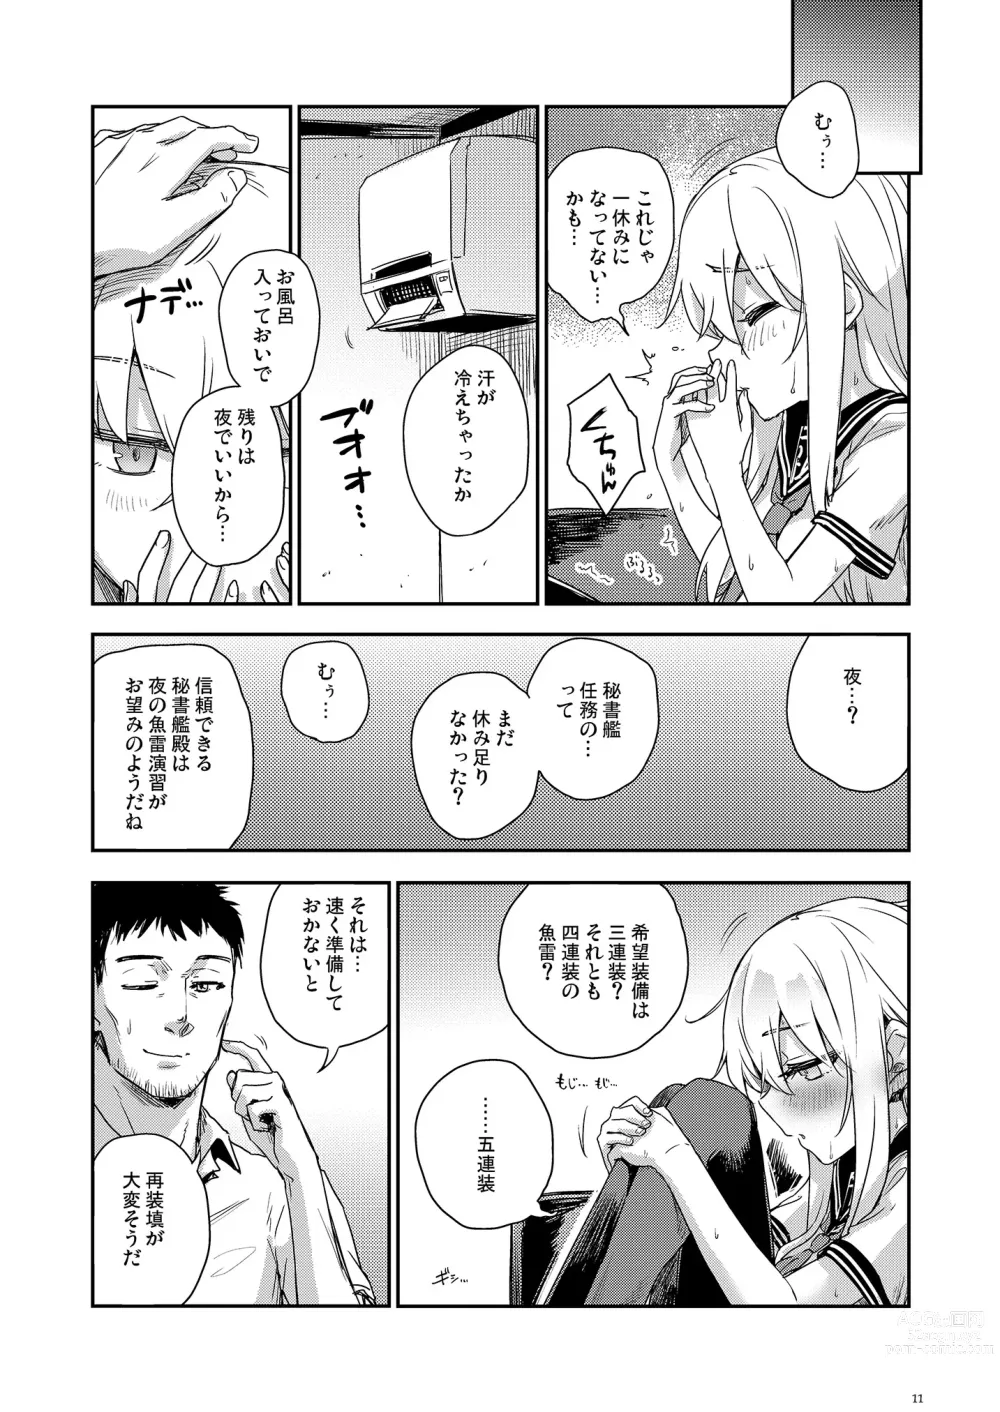 Page 10 of doujinshi Hishokan to Nettaiya